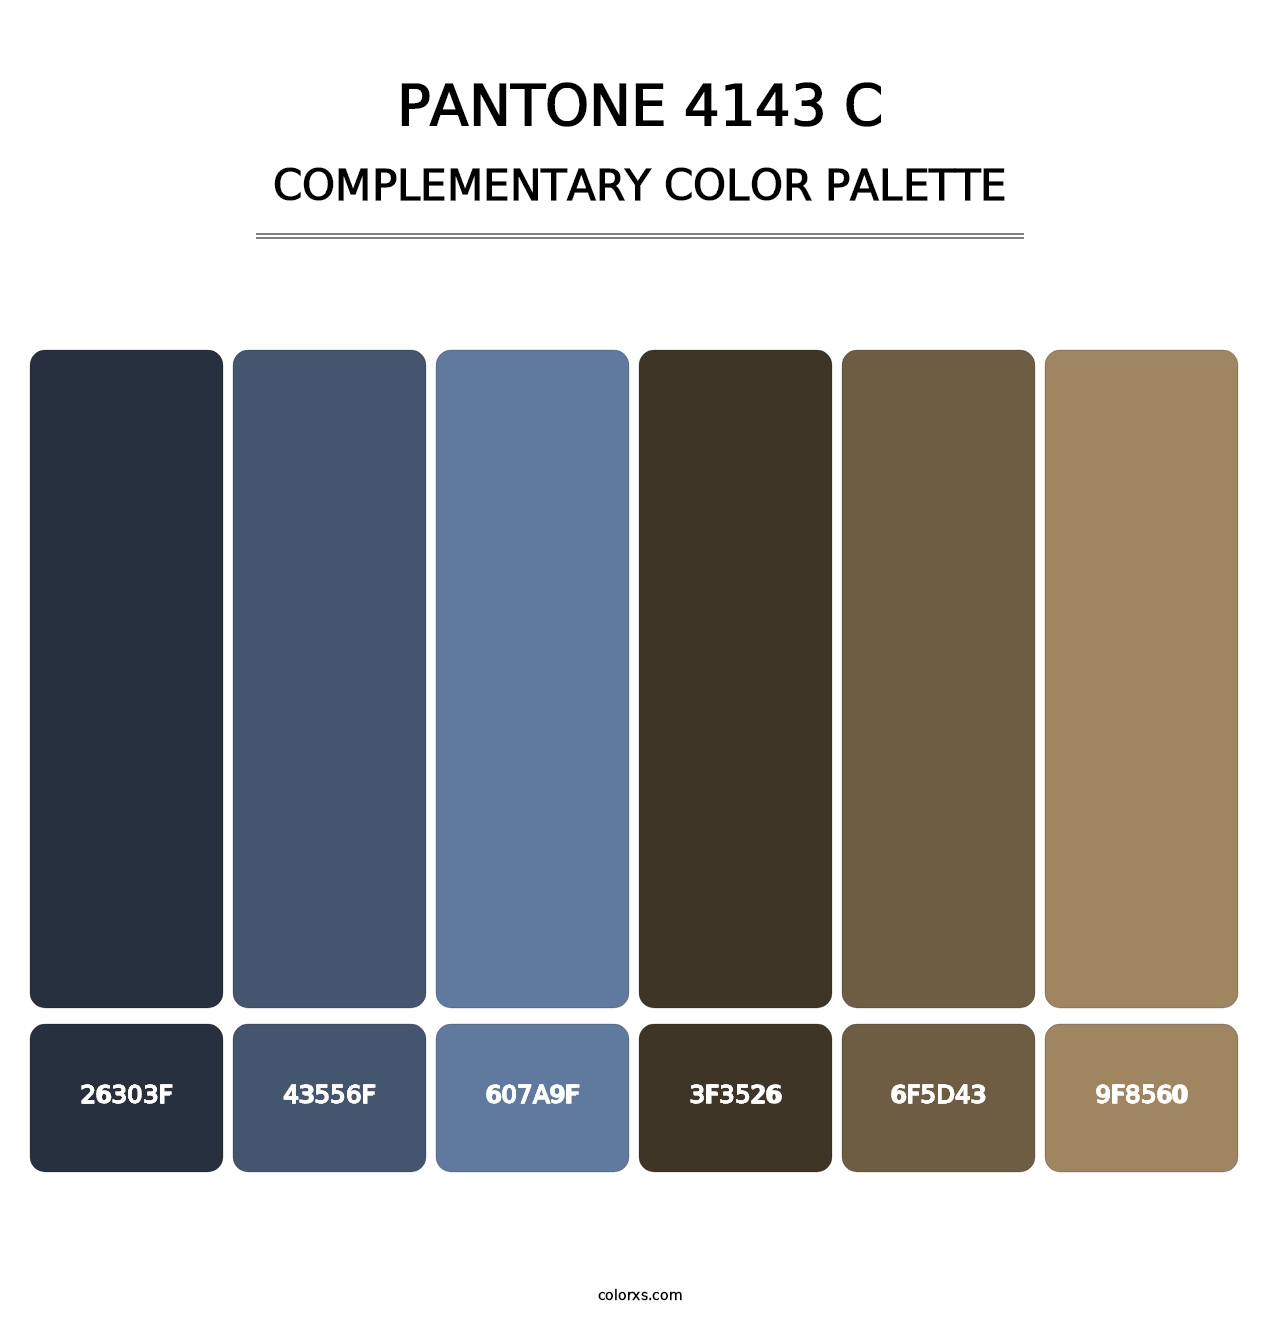 PANTONE 4143 C - Complementary Color Palette